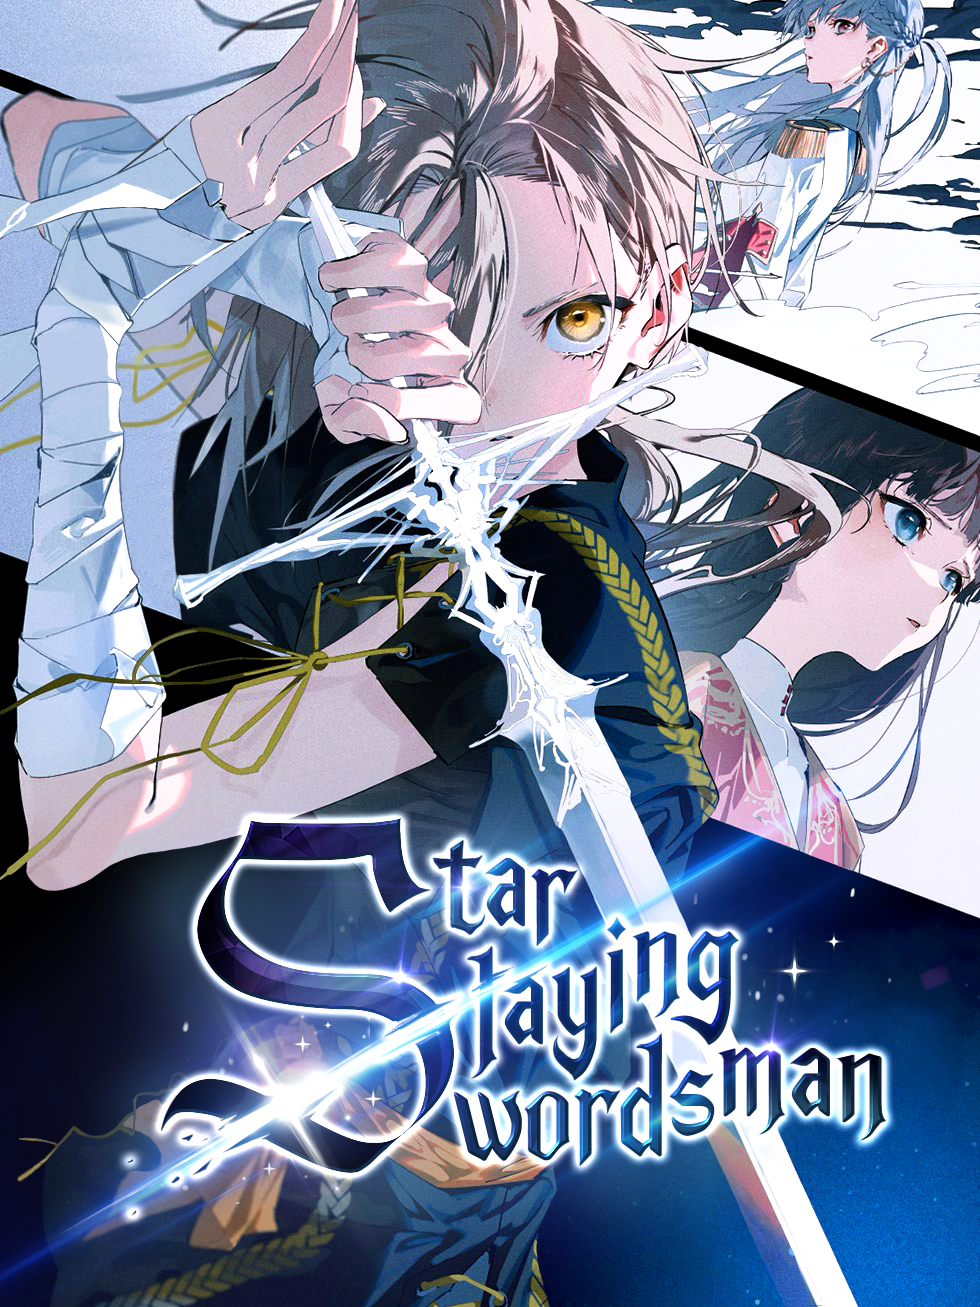 Star slaying Swordman